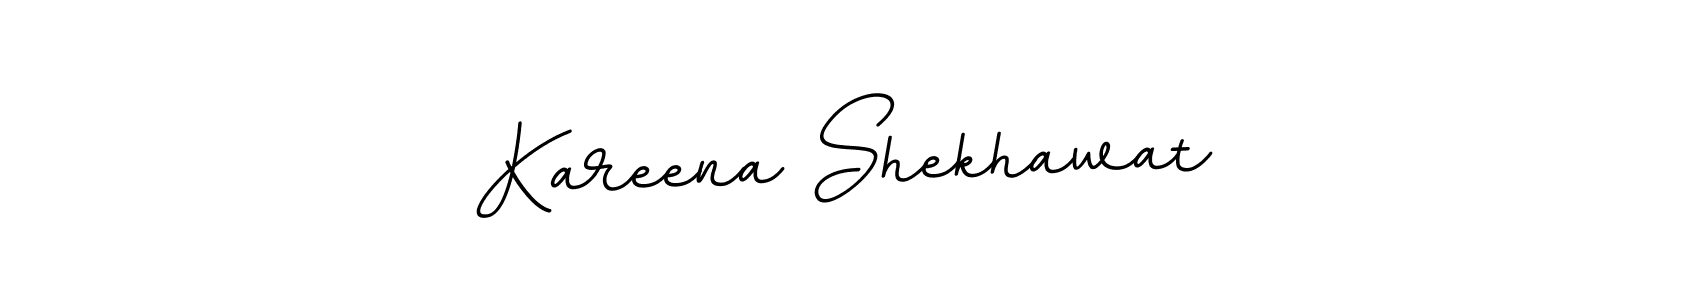 How to Draw Kareena Shekhawat signature style? BallpointsItalic-DORy9 is a latest design signature styles for name Kareena Shekhawat. Kareena Shekhawat signature style 11 images and pictures png